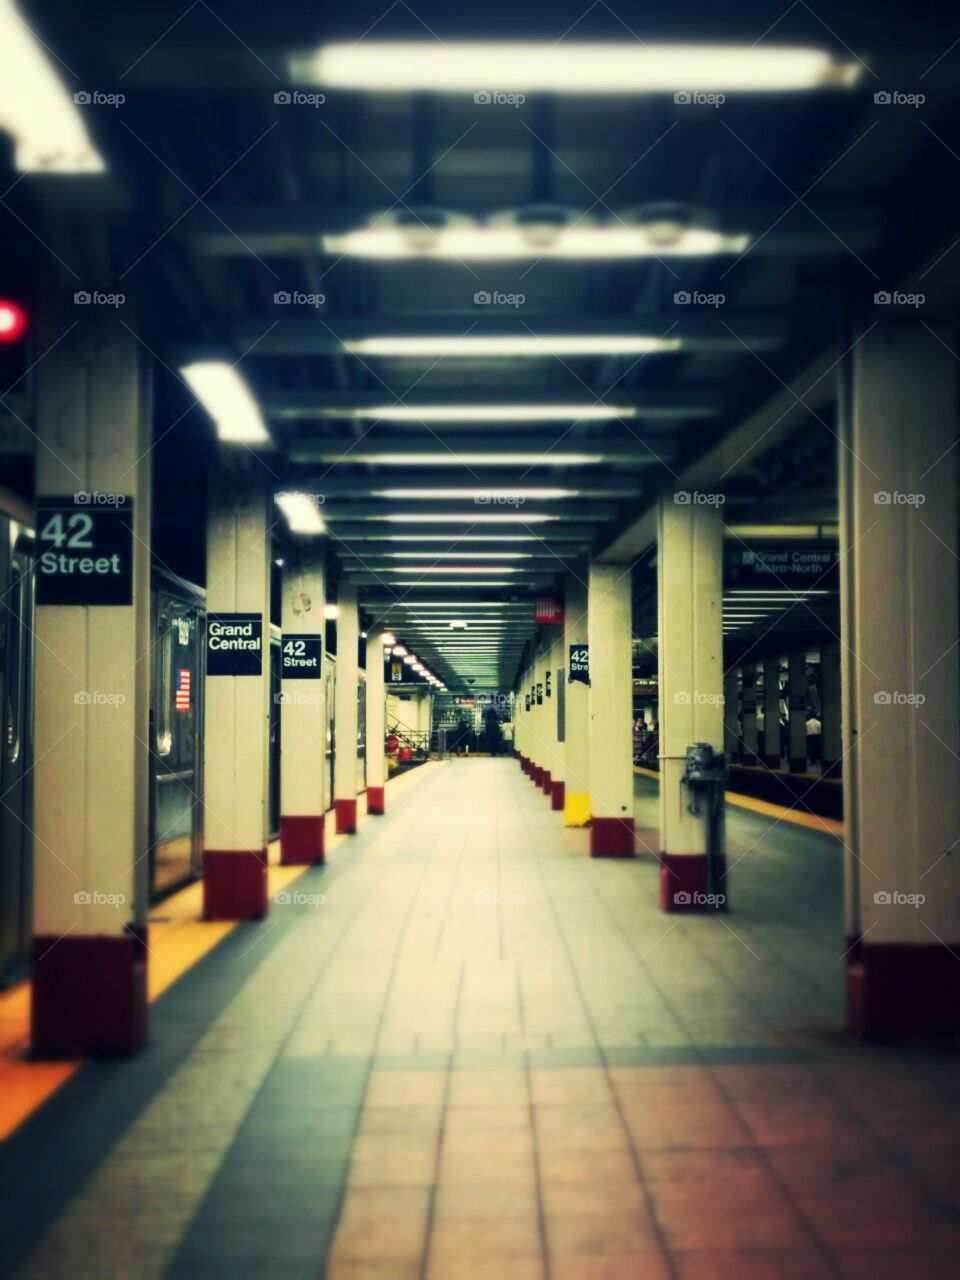 42 Street Subway Manhattan NY. The famous historical subway of New York